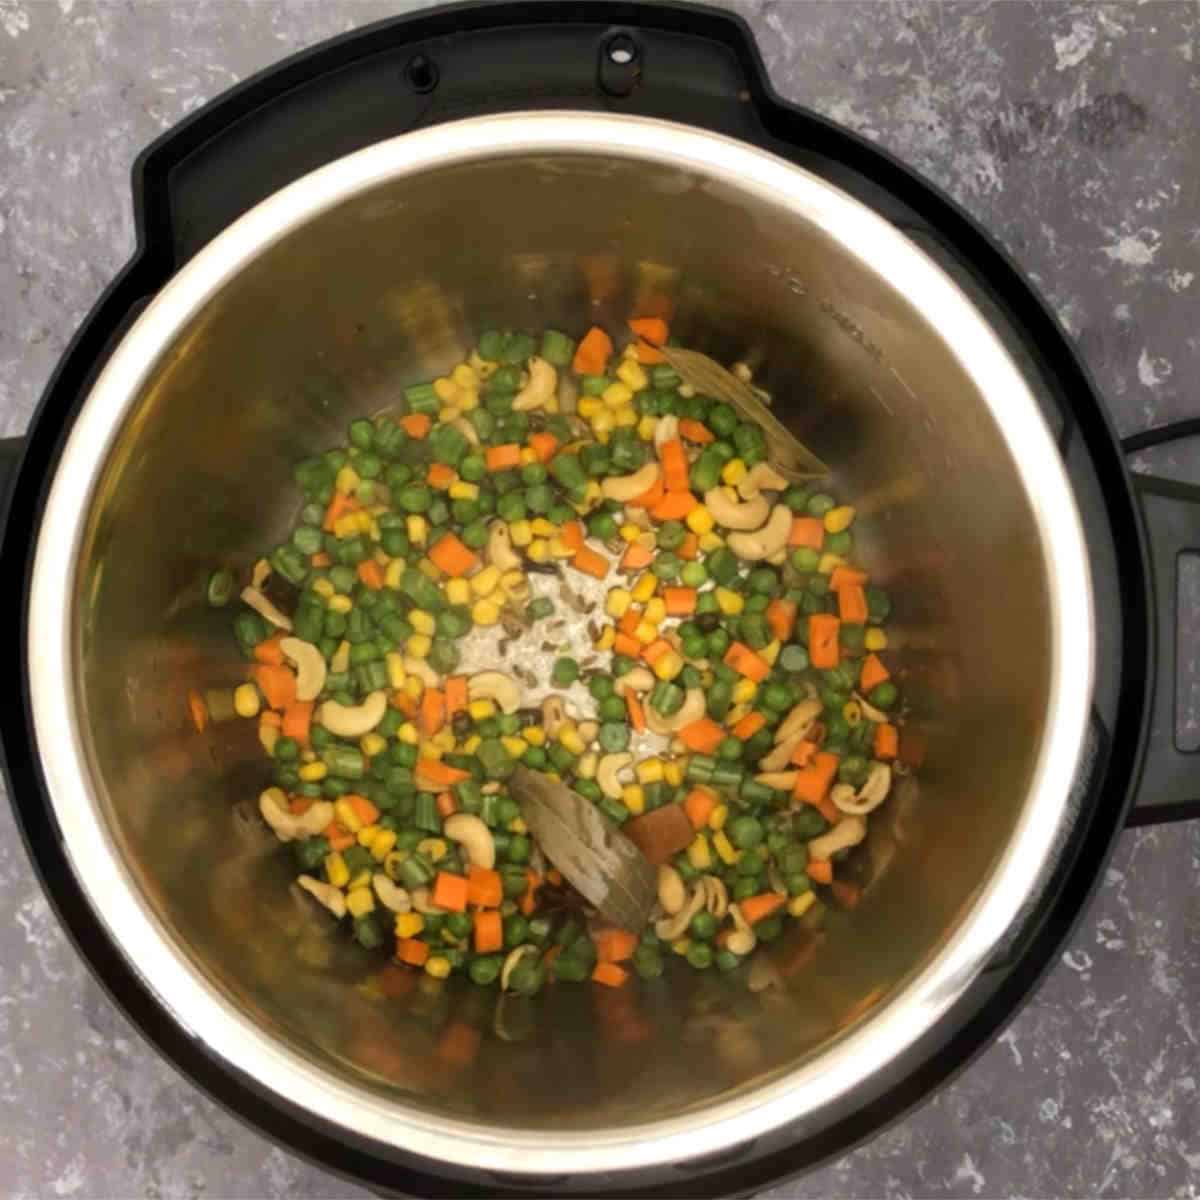 Add veggies and saute.